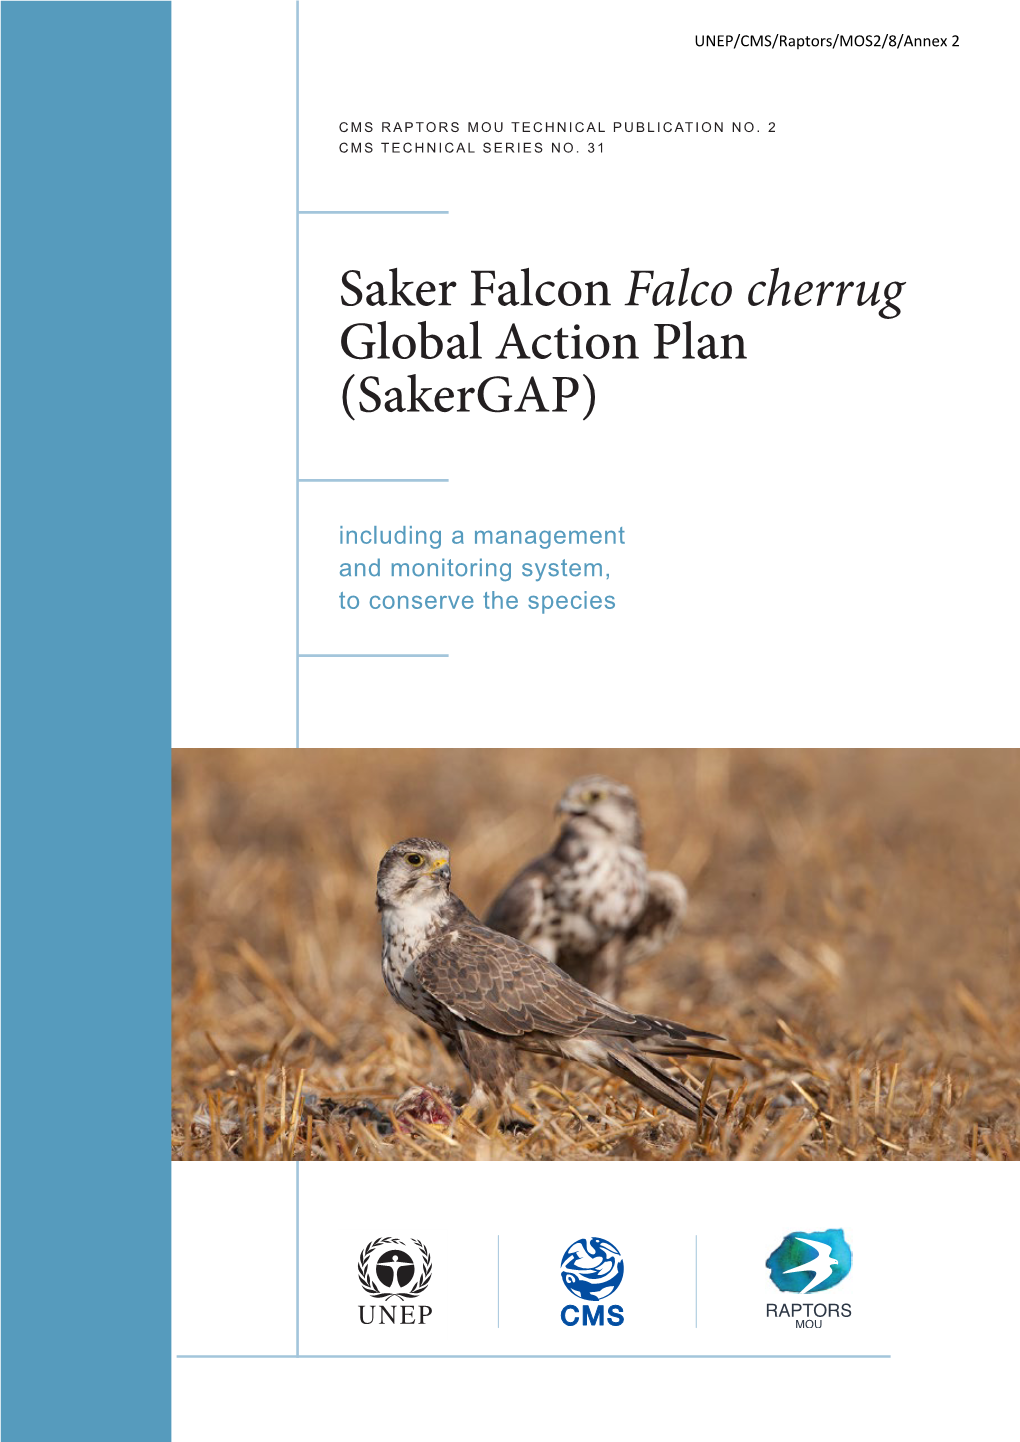 Saker Falcon Global Action Plan